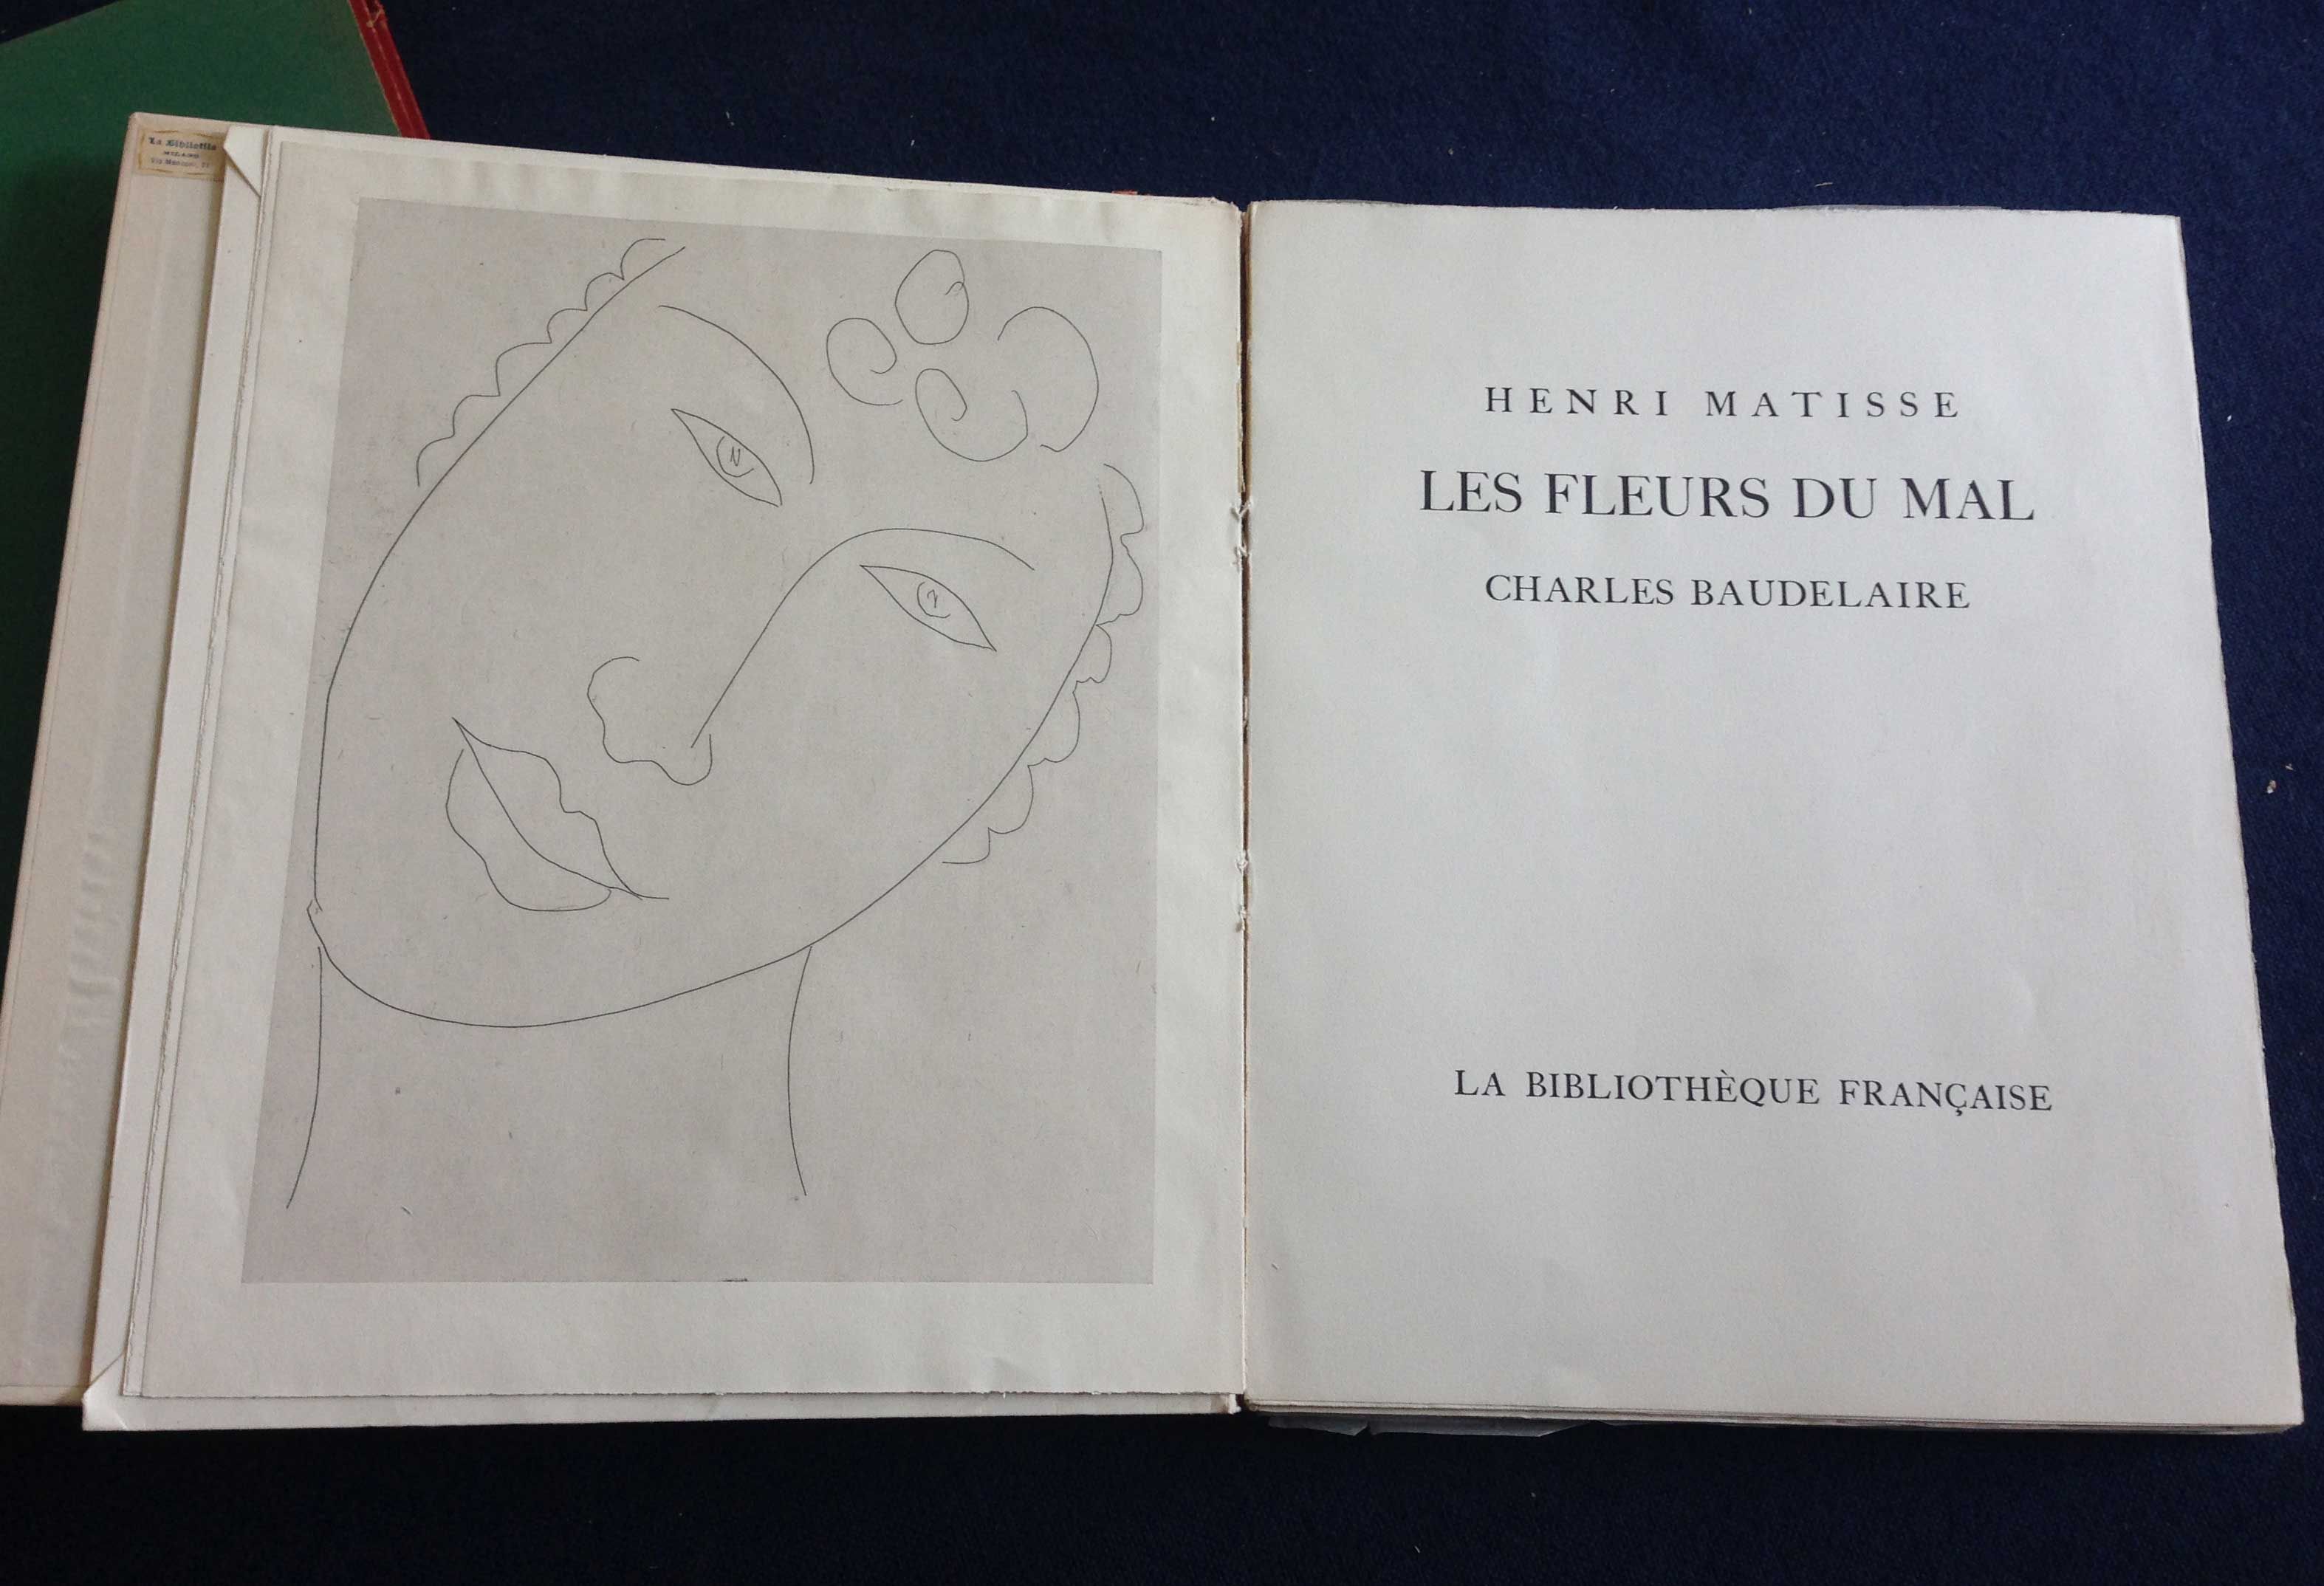 Les Fleurs du Mal, illlustrated by Matisse